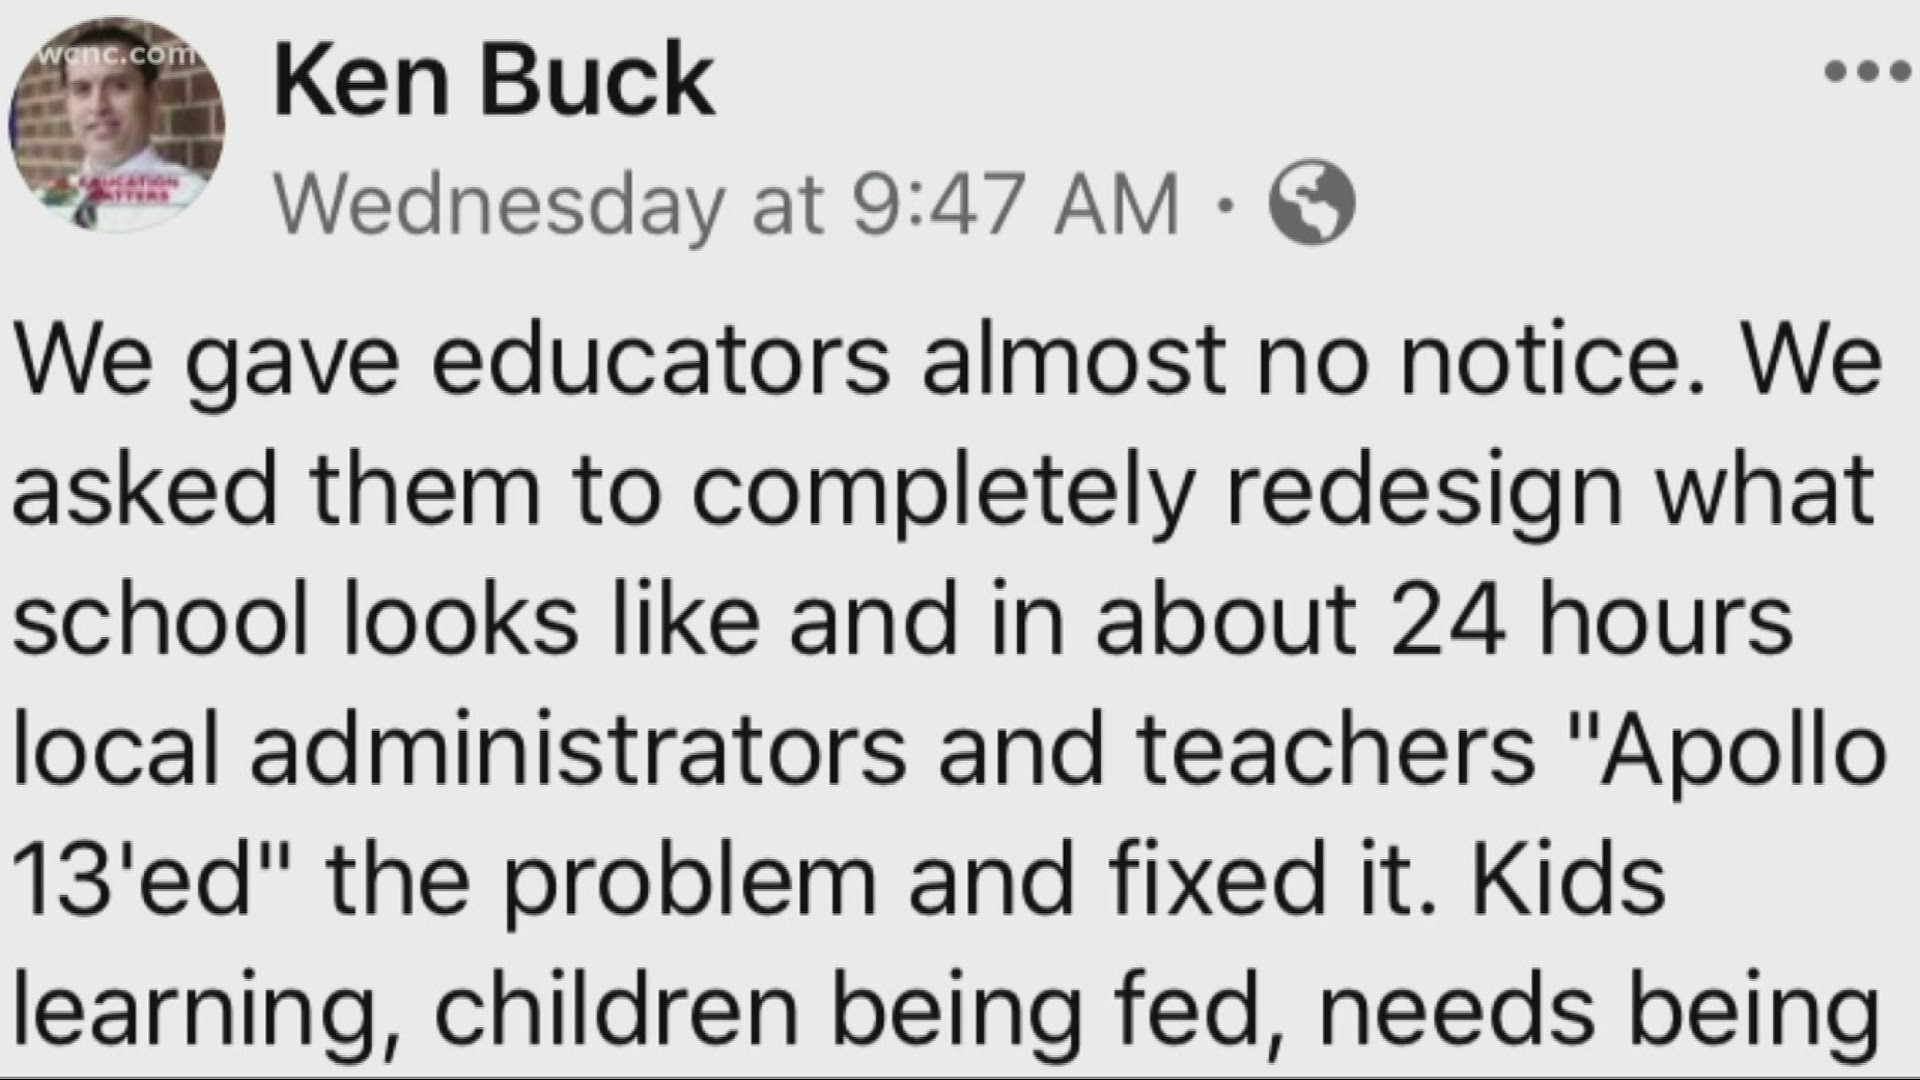 "We gave educators almost no notice. We asked them to completely redesign what school looks," Ken Buck wrote praising teachers amid coronavirus home schooling.